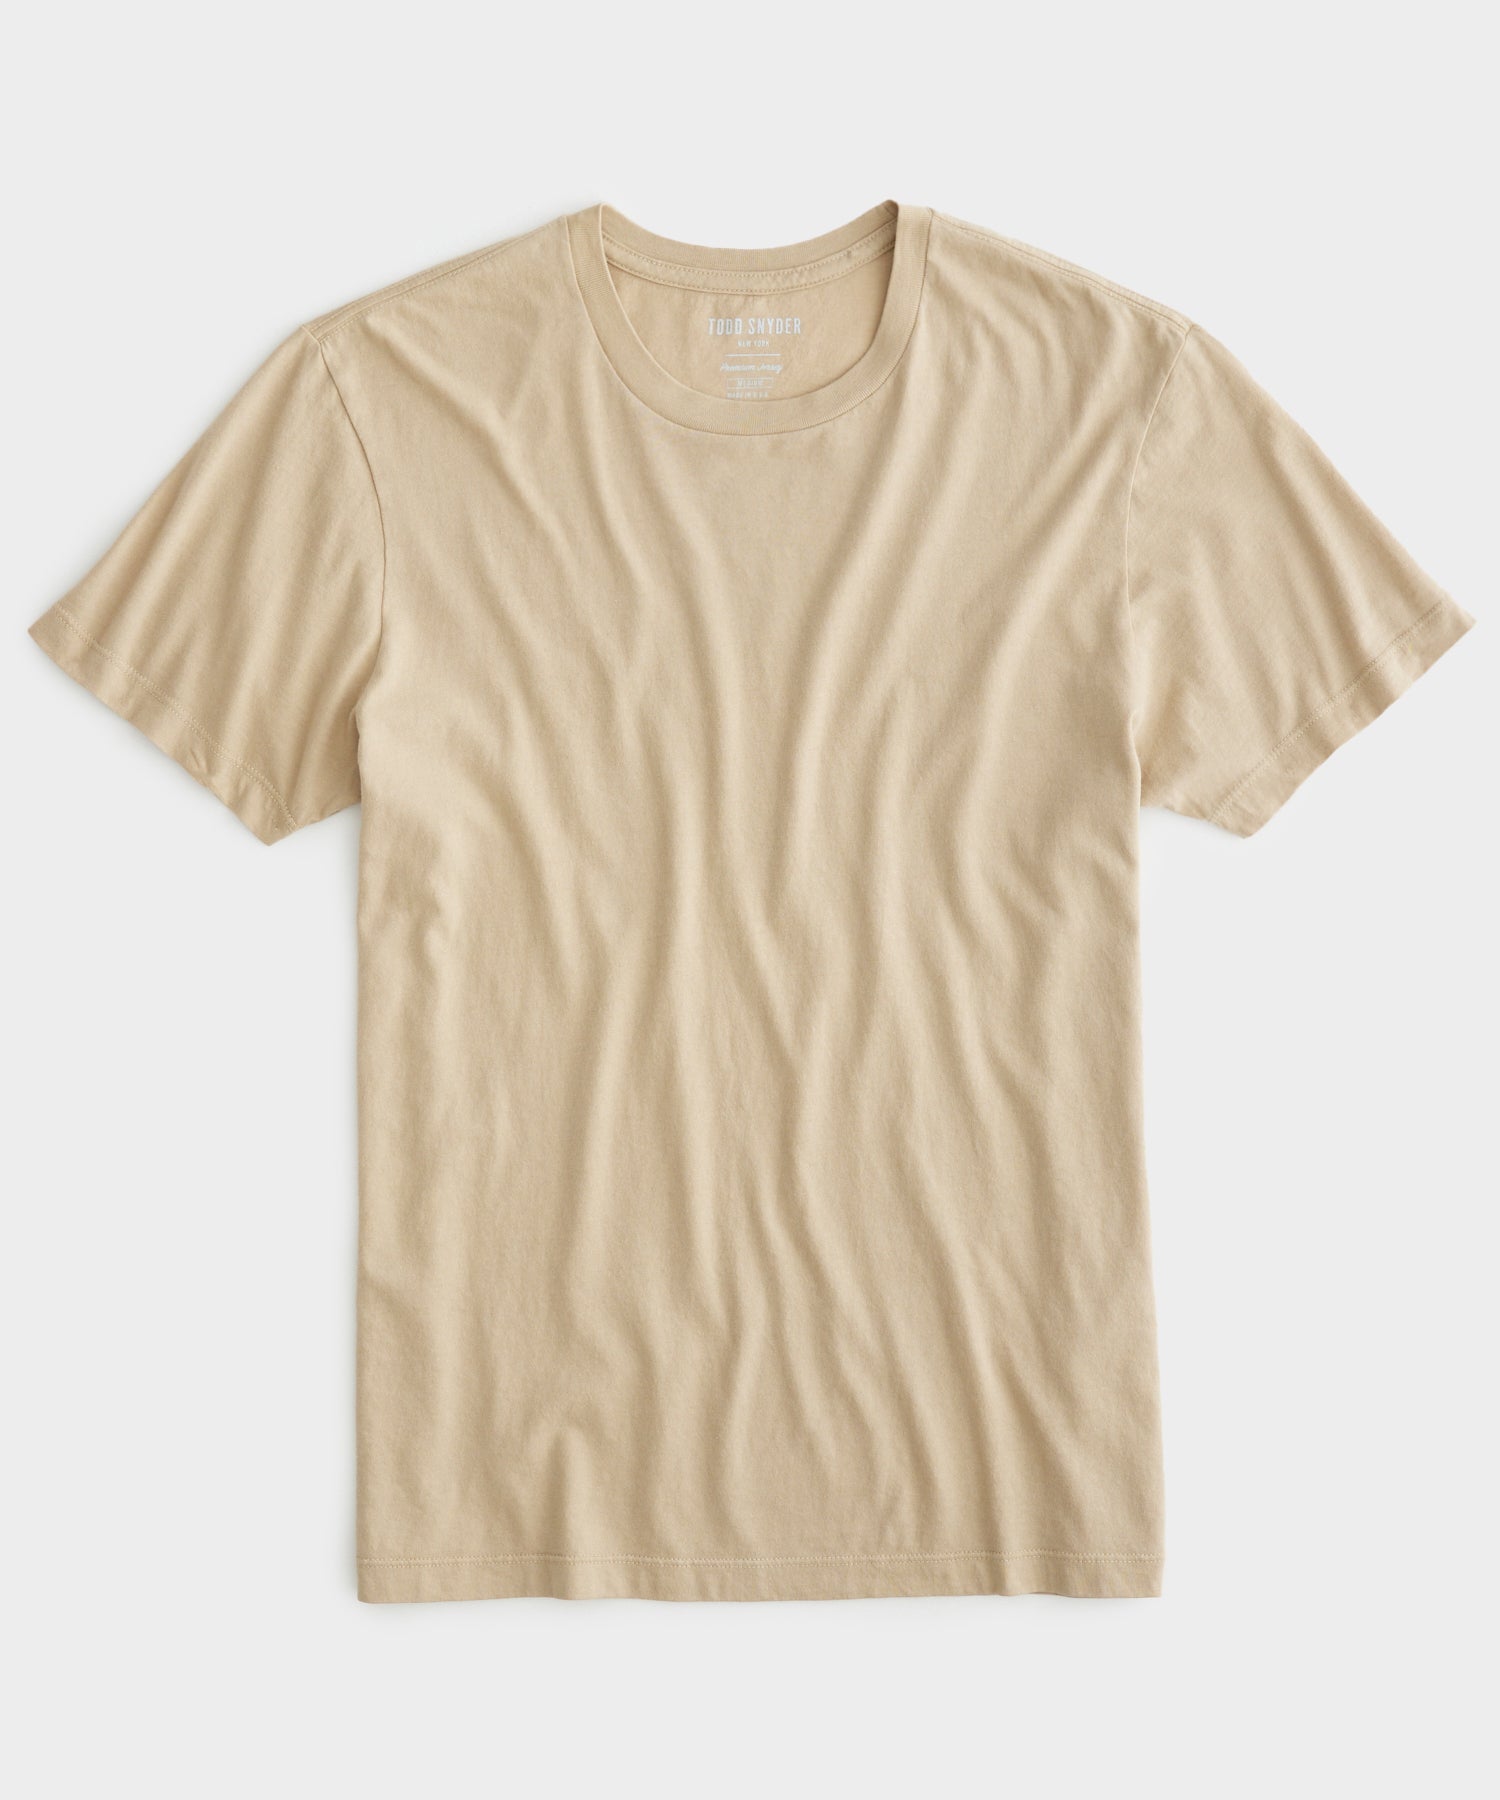 Made in L.A. Premium Jersey T-Shirt in Desert Beige